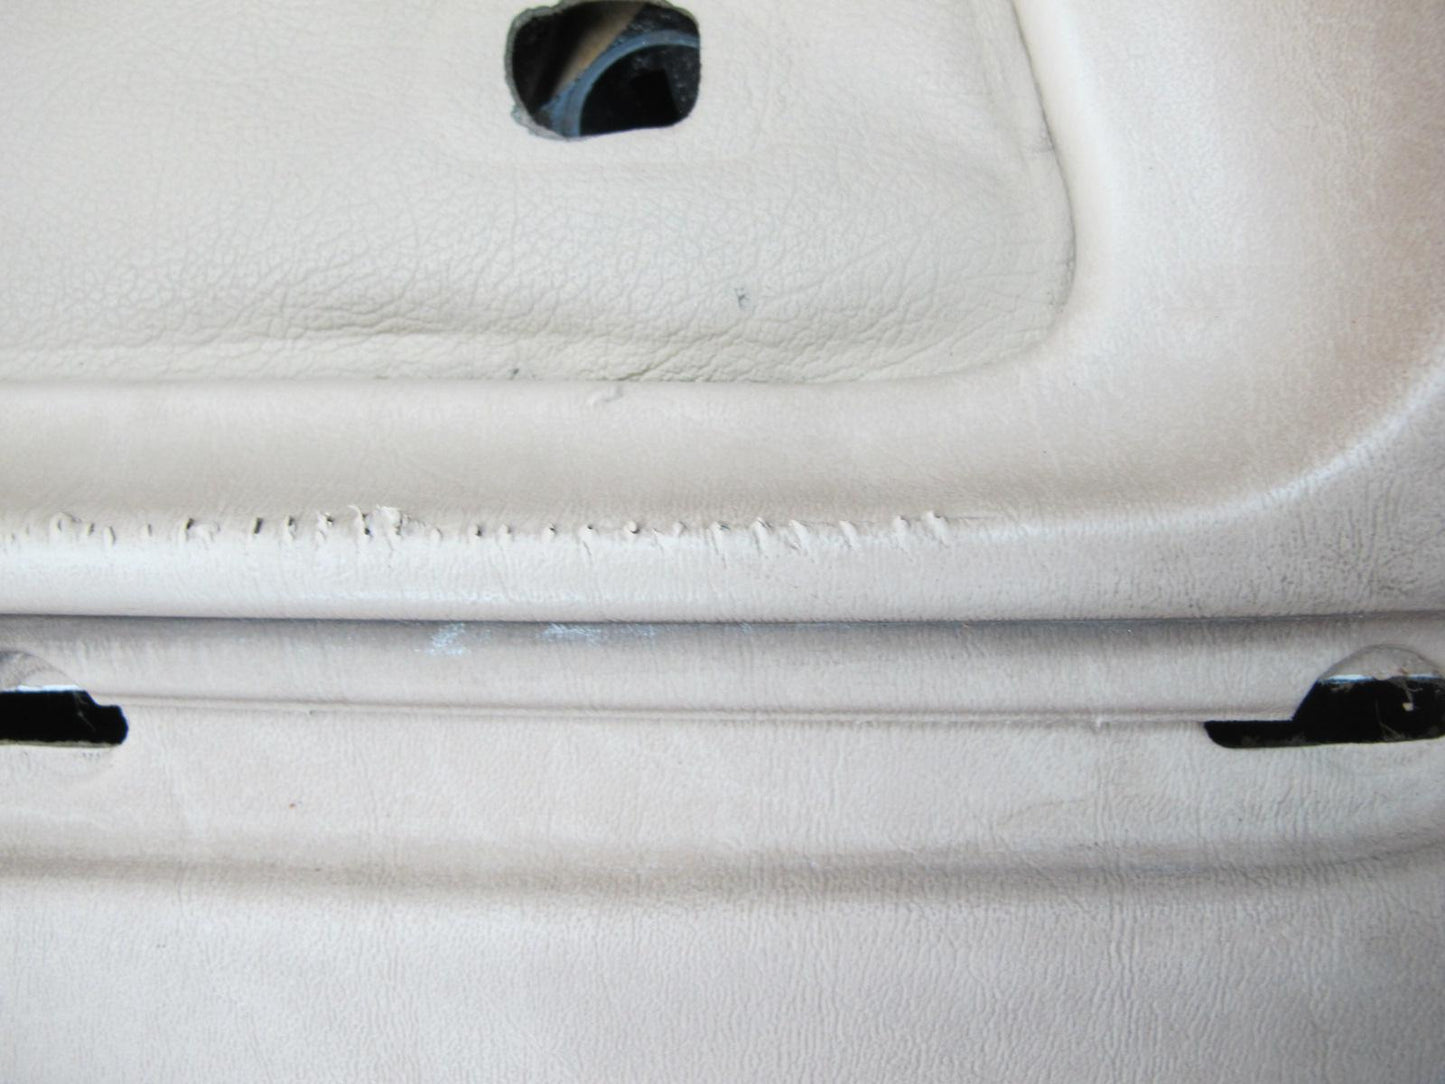 96-98 Mercedes R129 Sl-class Set of 2 Ront Door Interior Trim Cover Panel OEM